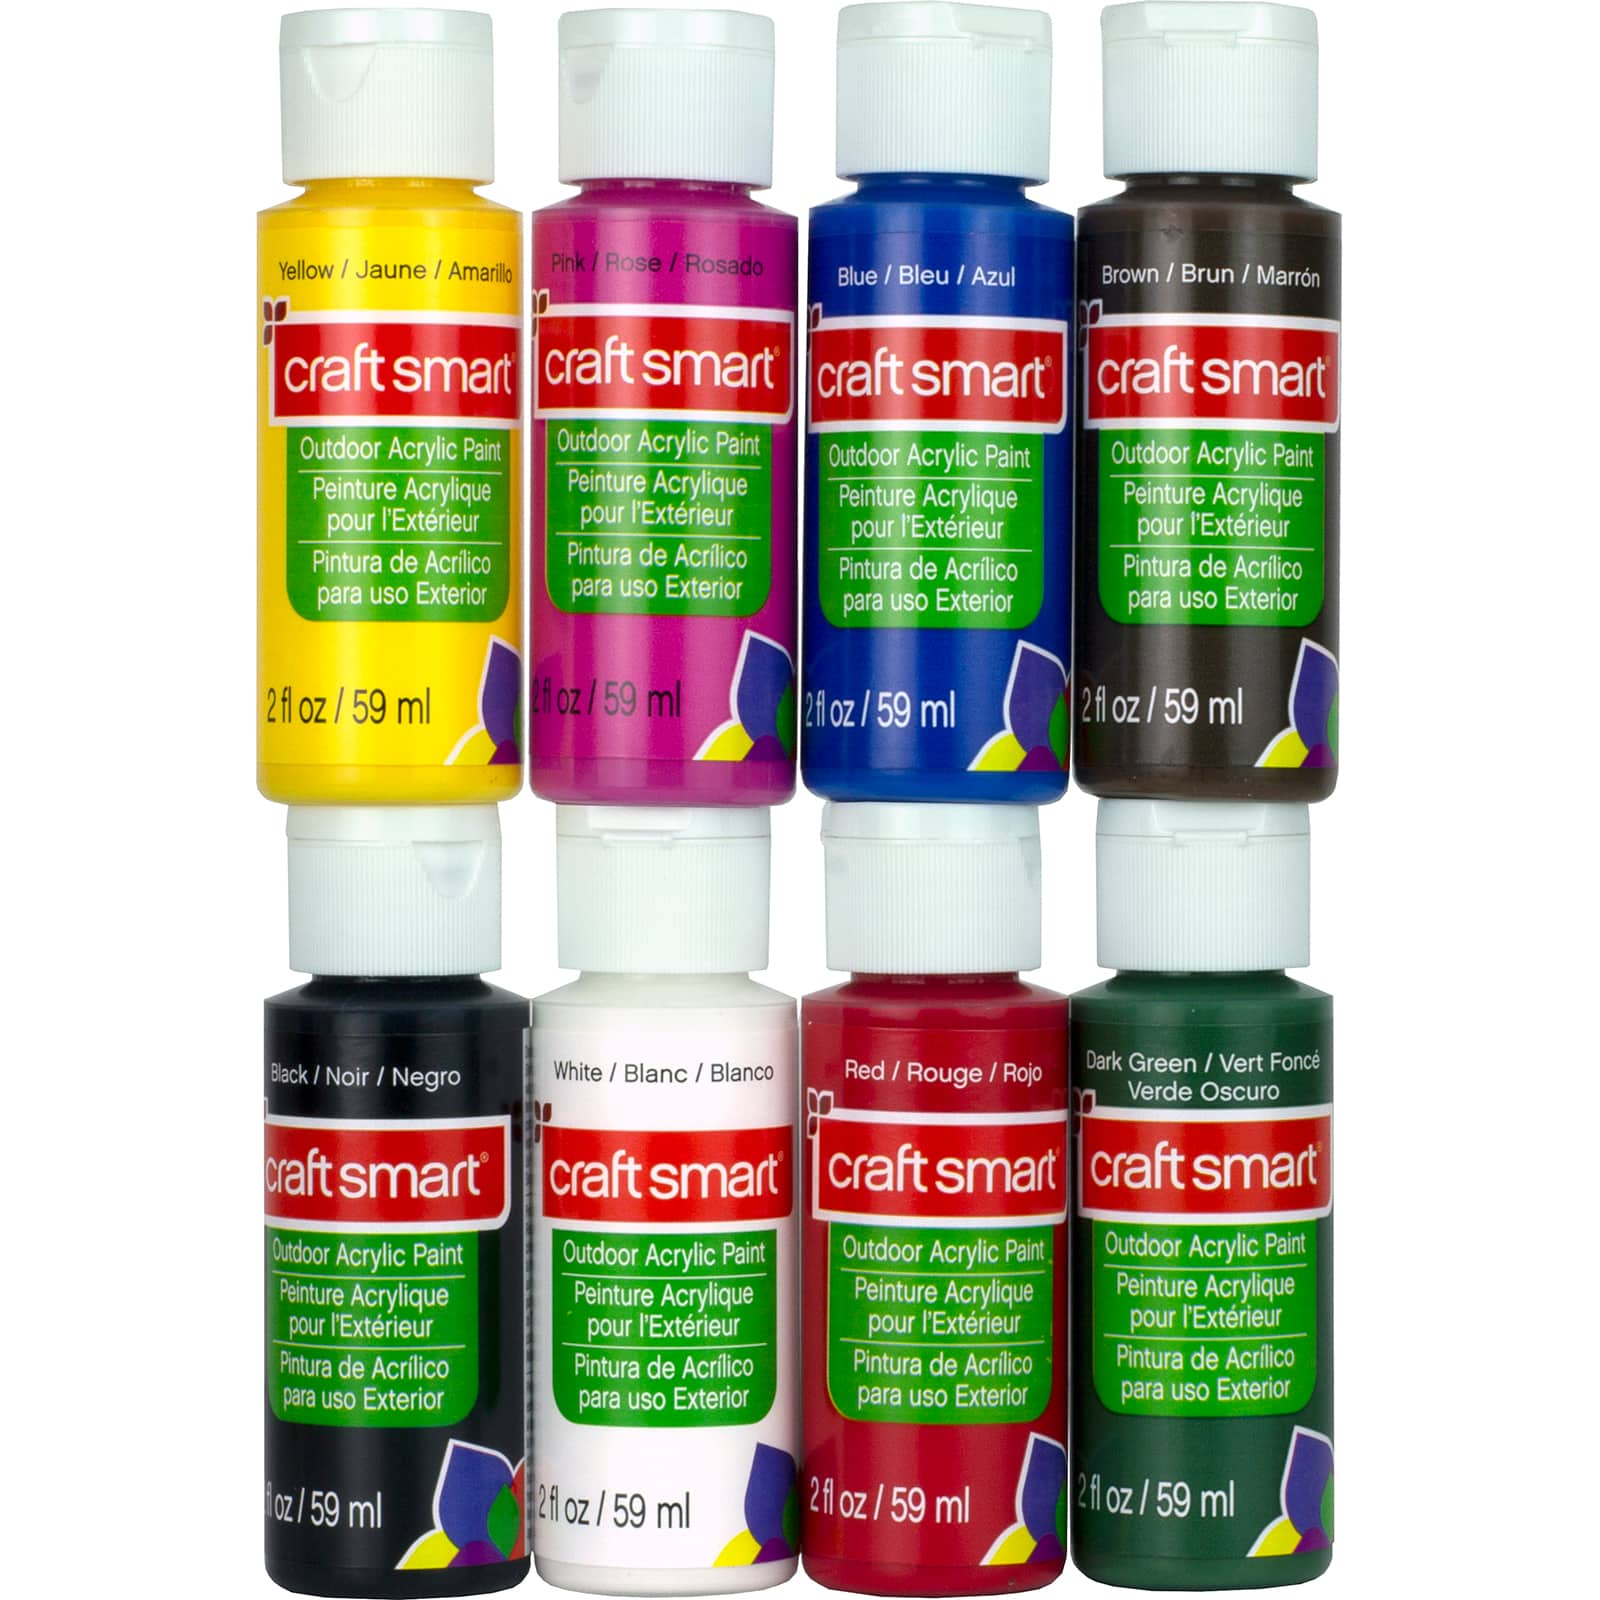 24 Colors 60ml Professional Acrylic Paint Set Waterproof Fabric